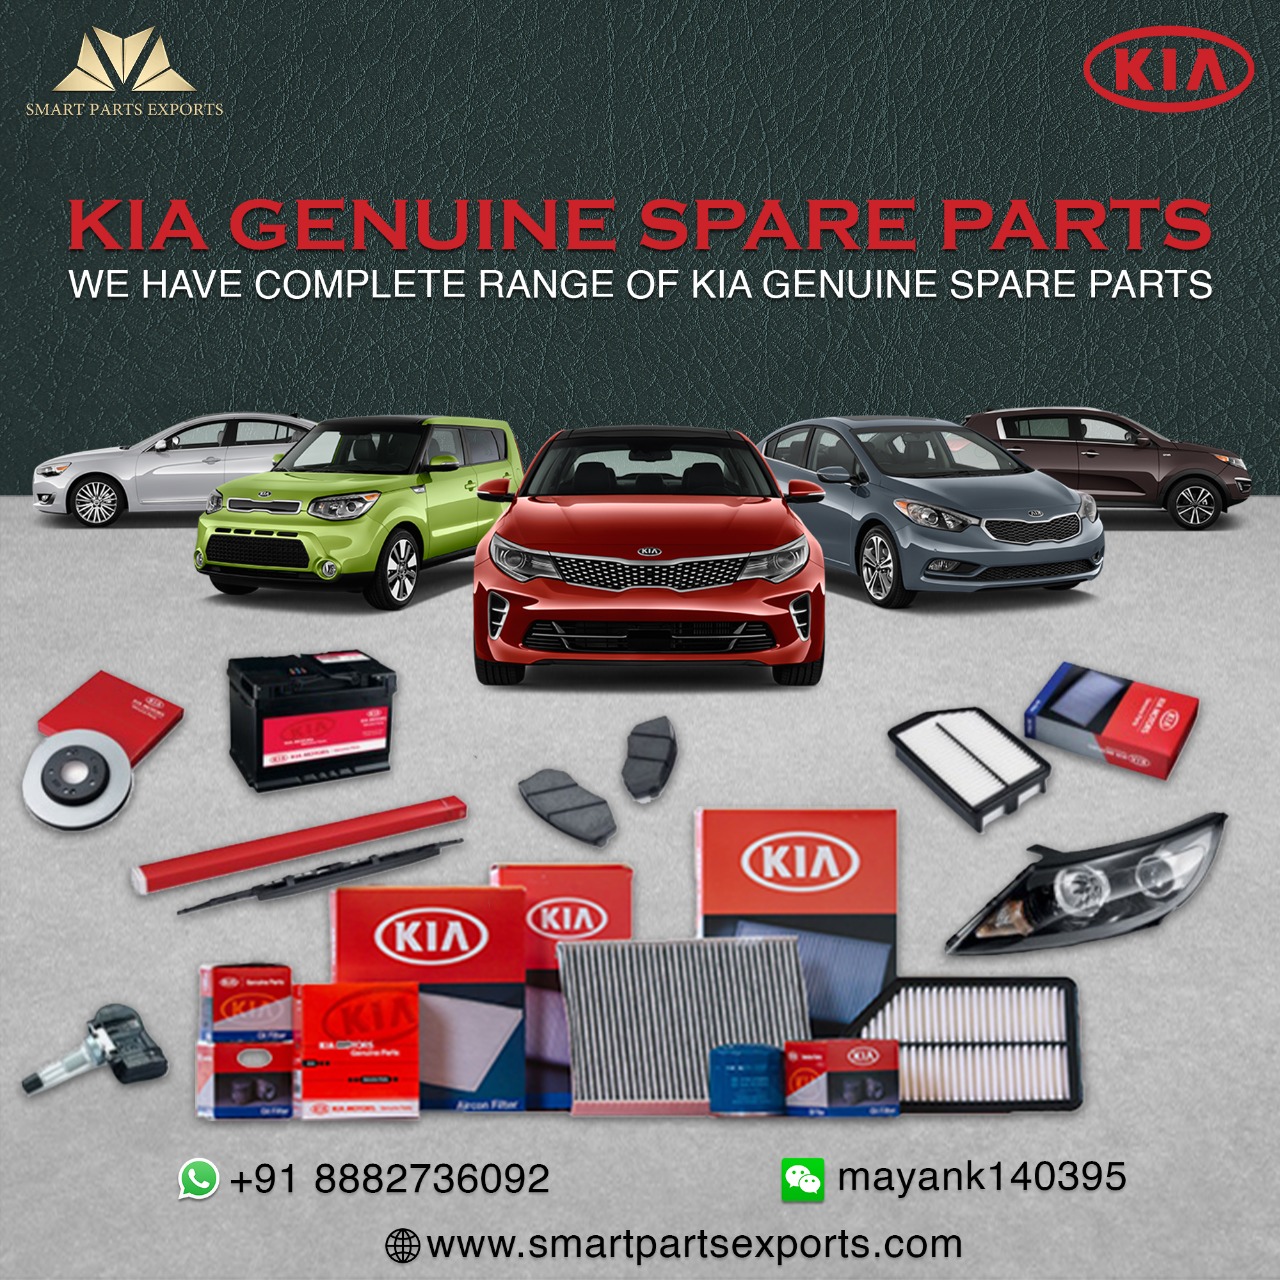 Kia genuine spare parts